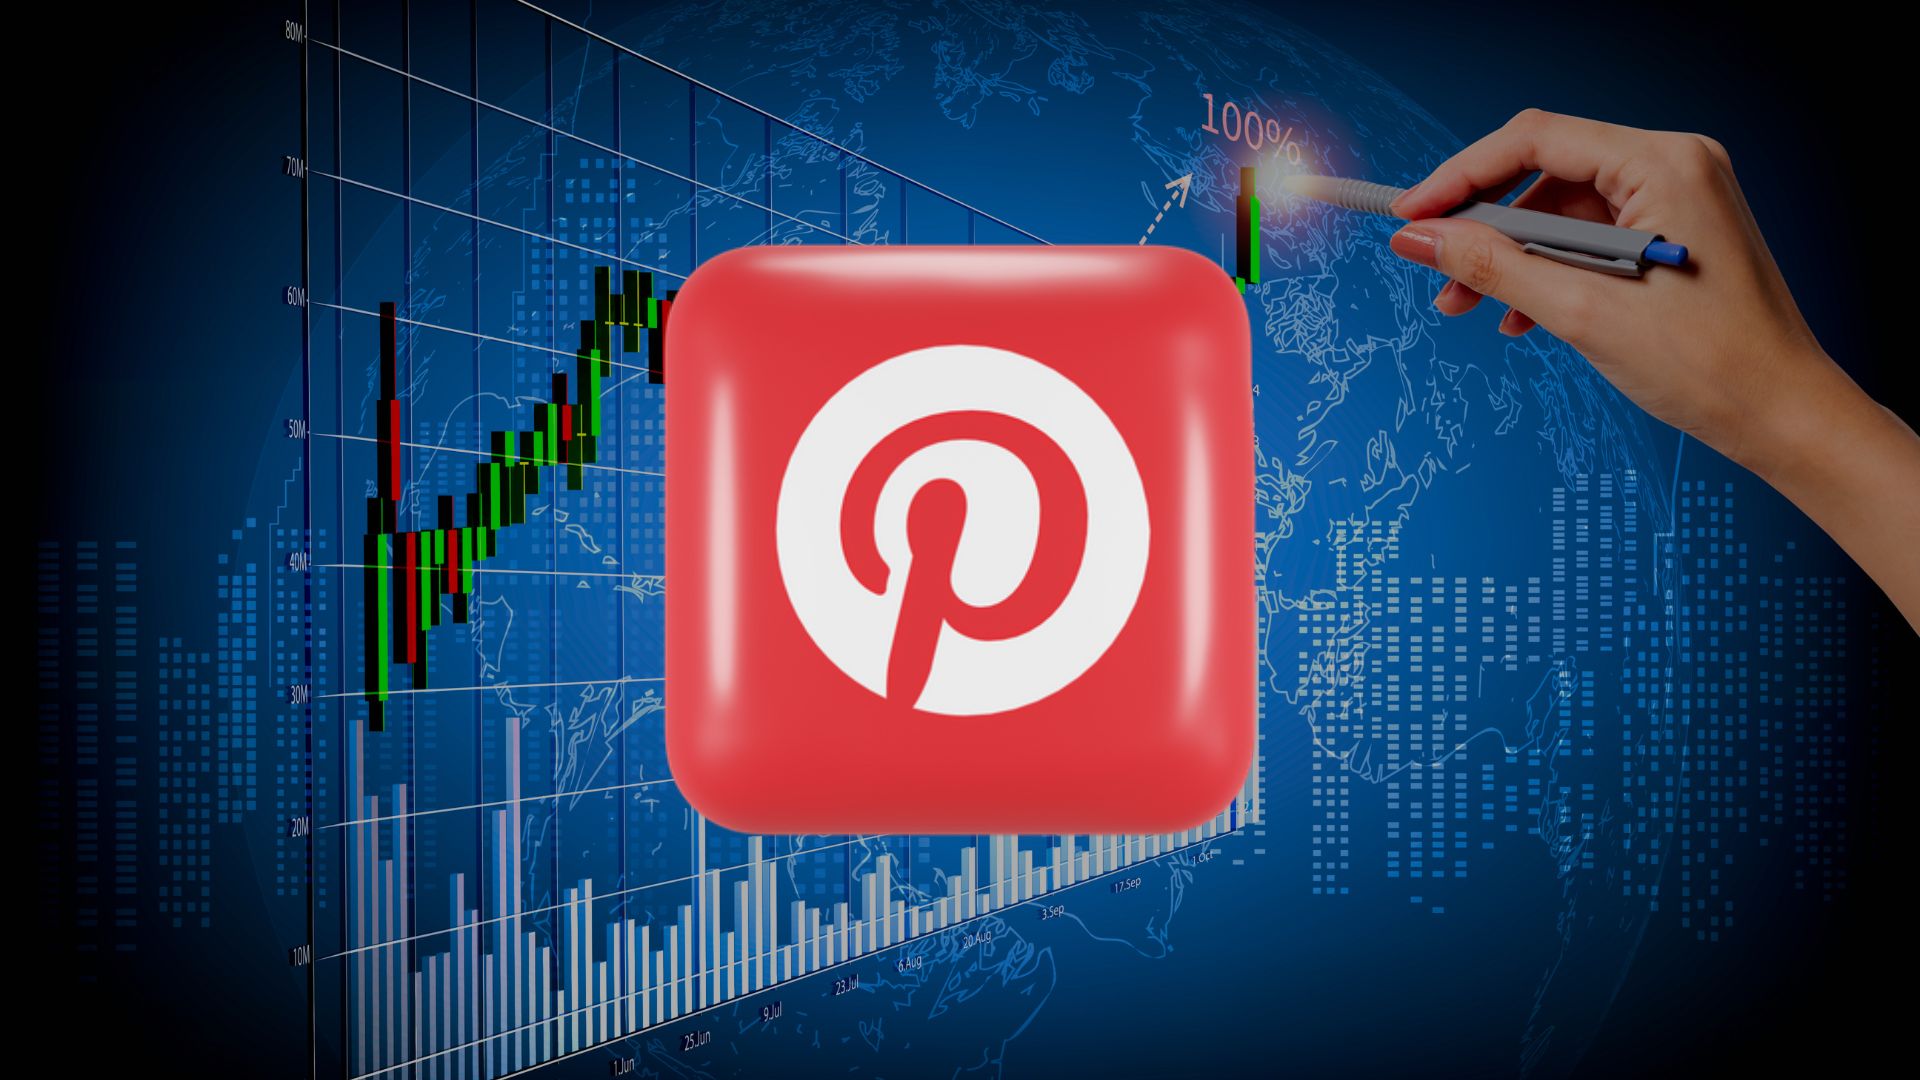 Pinterest Stock Price: PINS attaining the interest of Investors Amid Market Slowdown